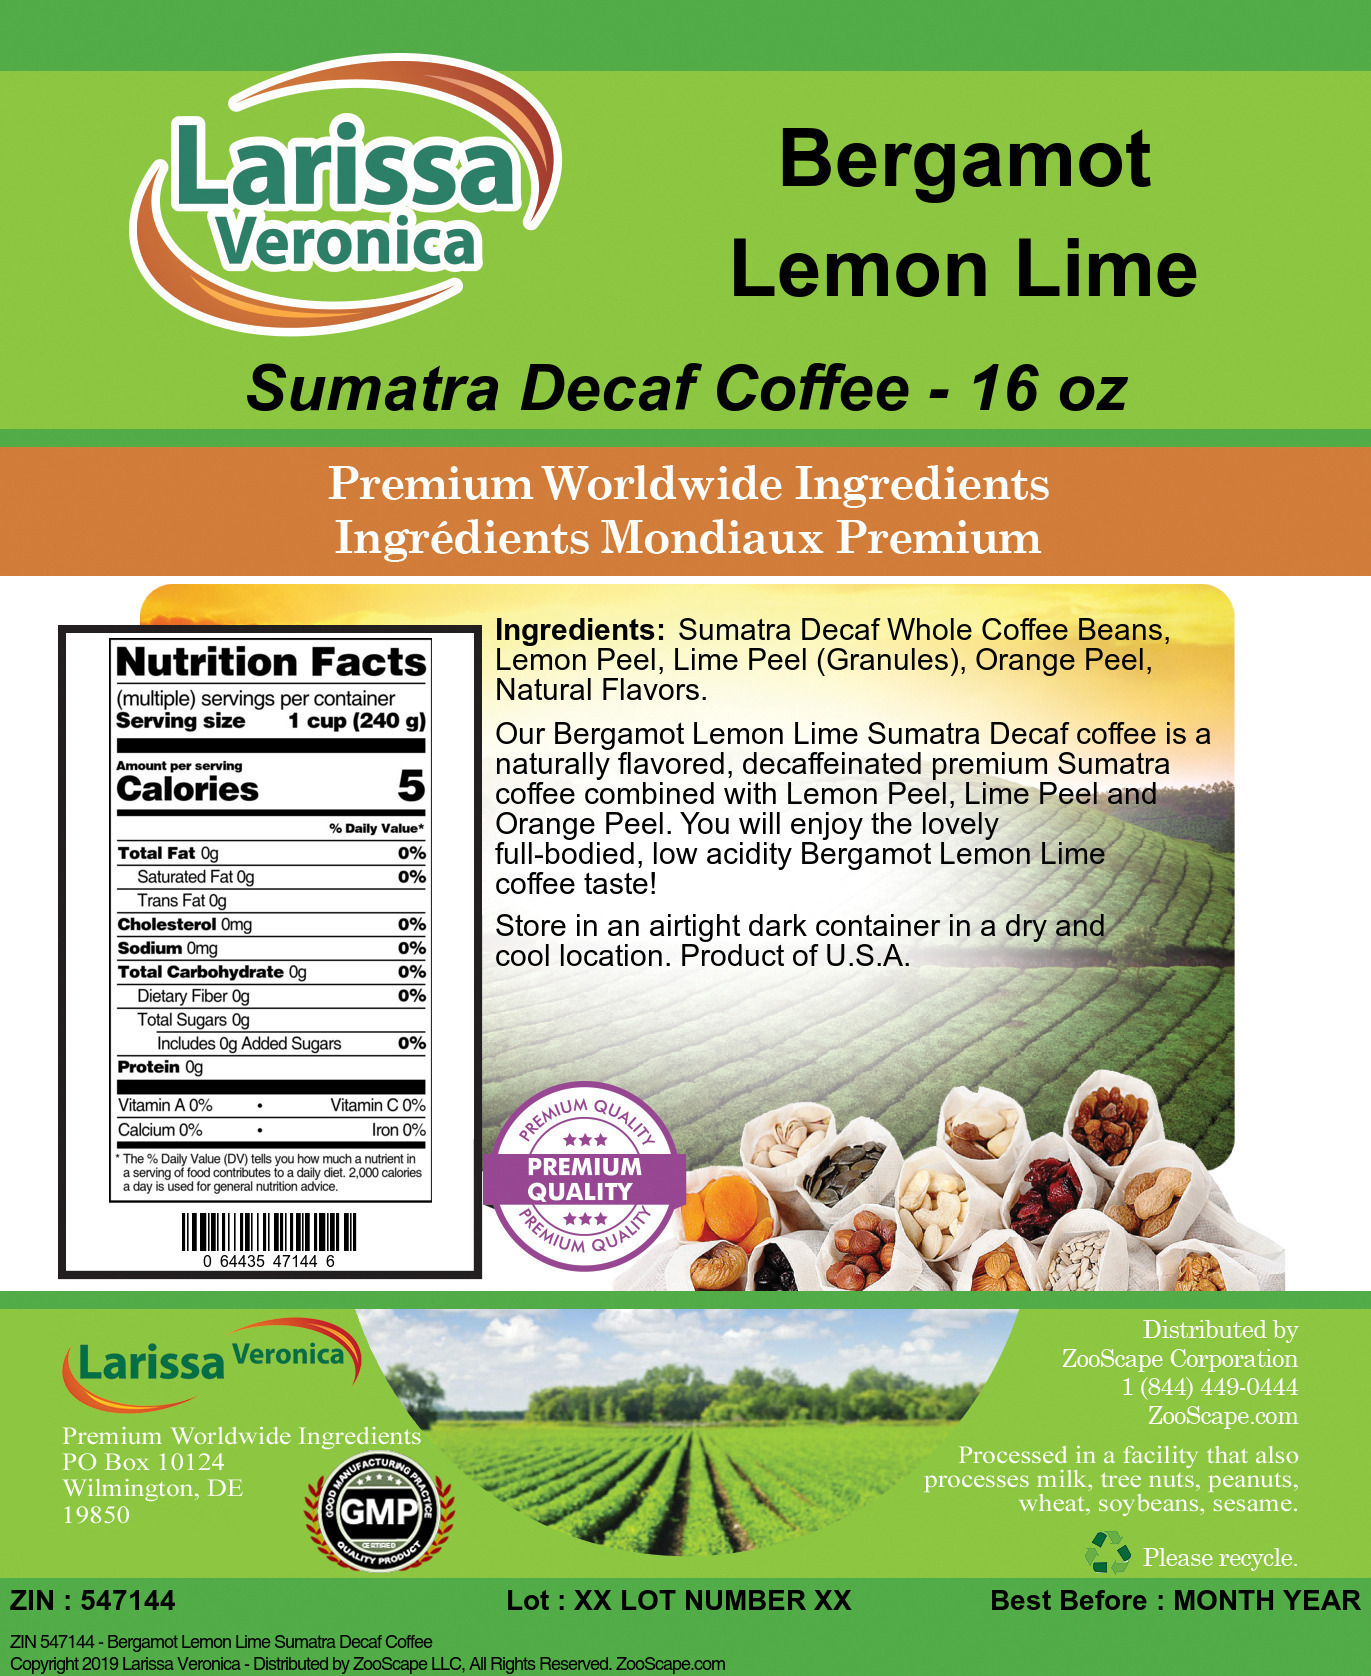 Bergamot Lemon Lime Sumatra Decaf Coffee - Label